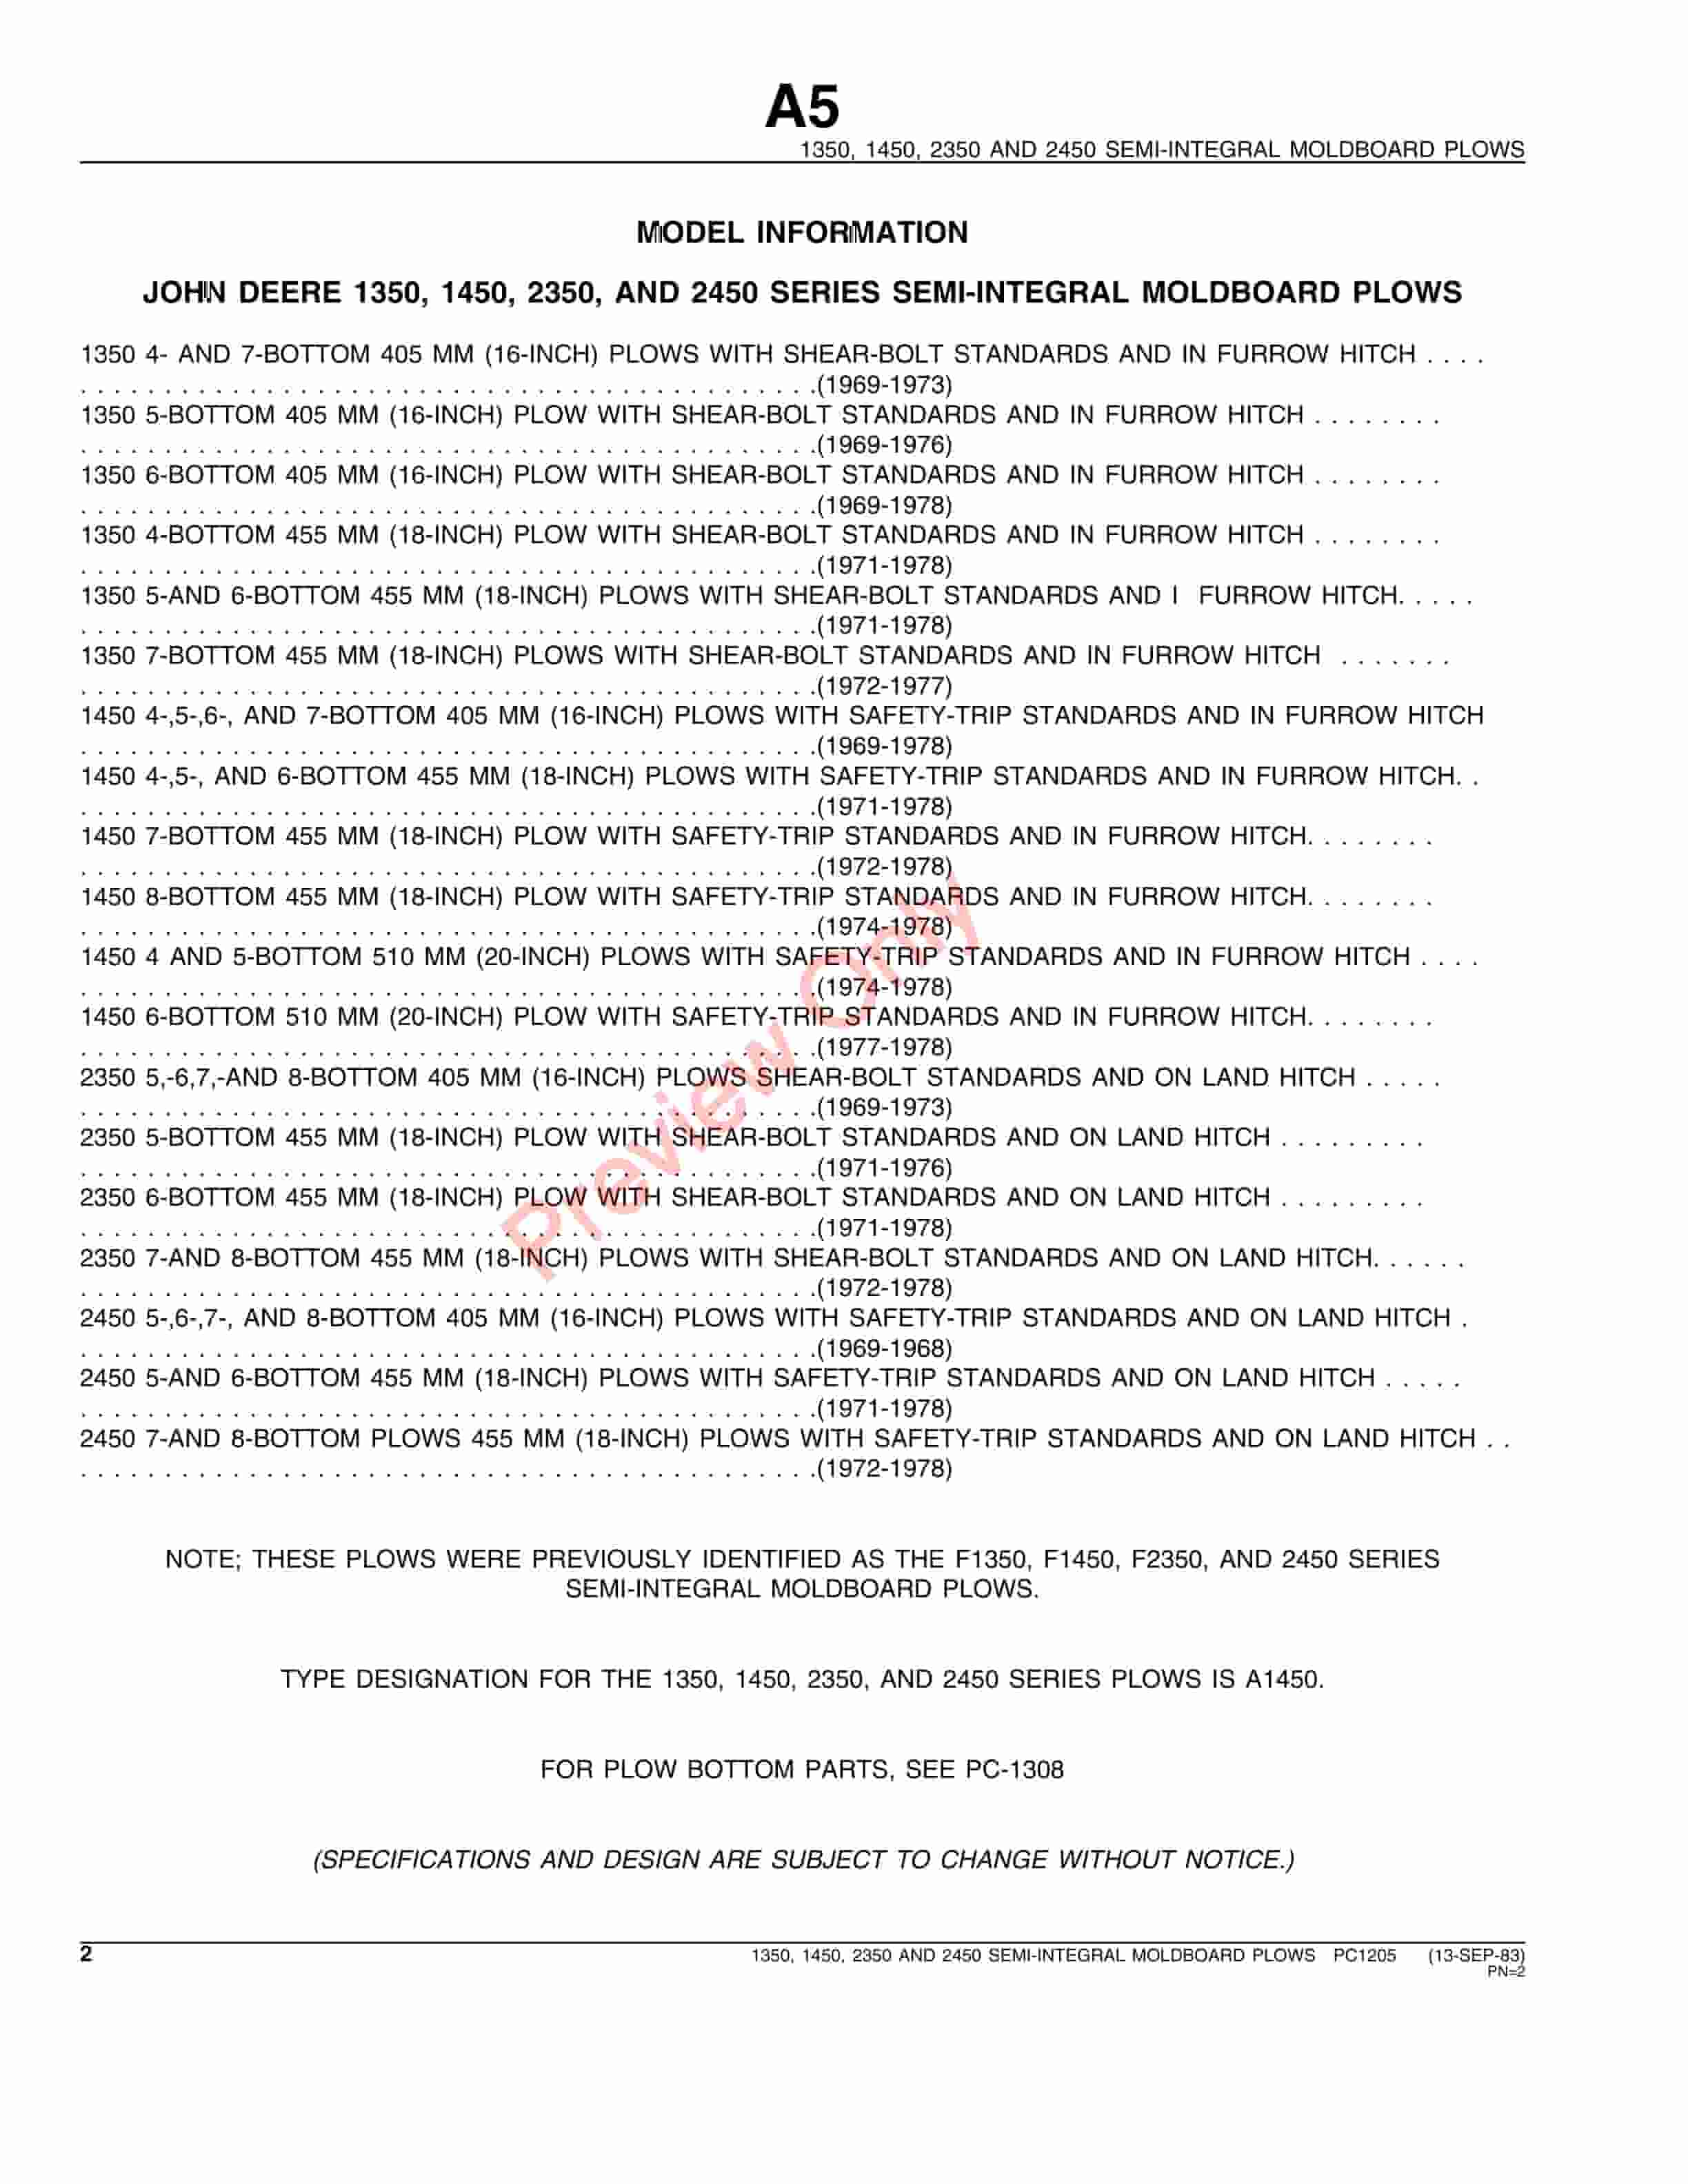 John Deere 1350, 1450, 2350, 2450 Series Semi-Integral Moldboard Plows Parts Catalog PC1205 13SEP83-4